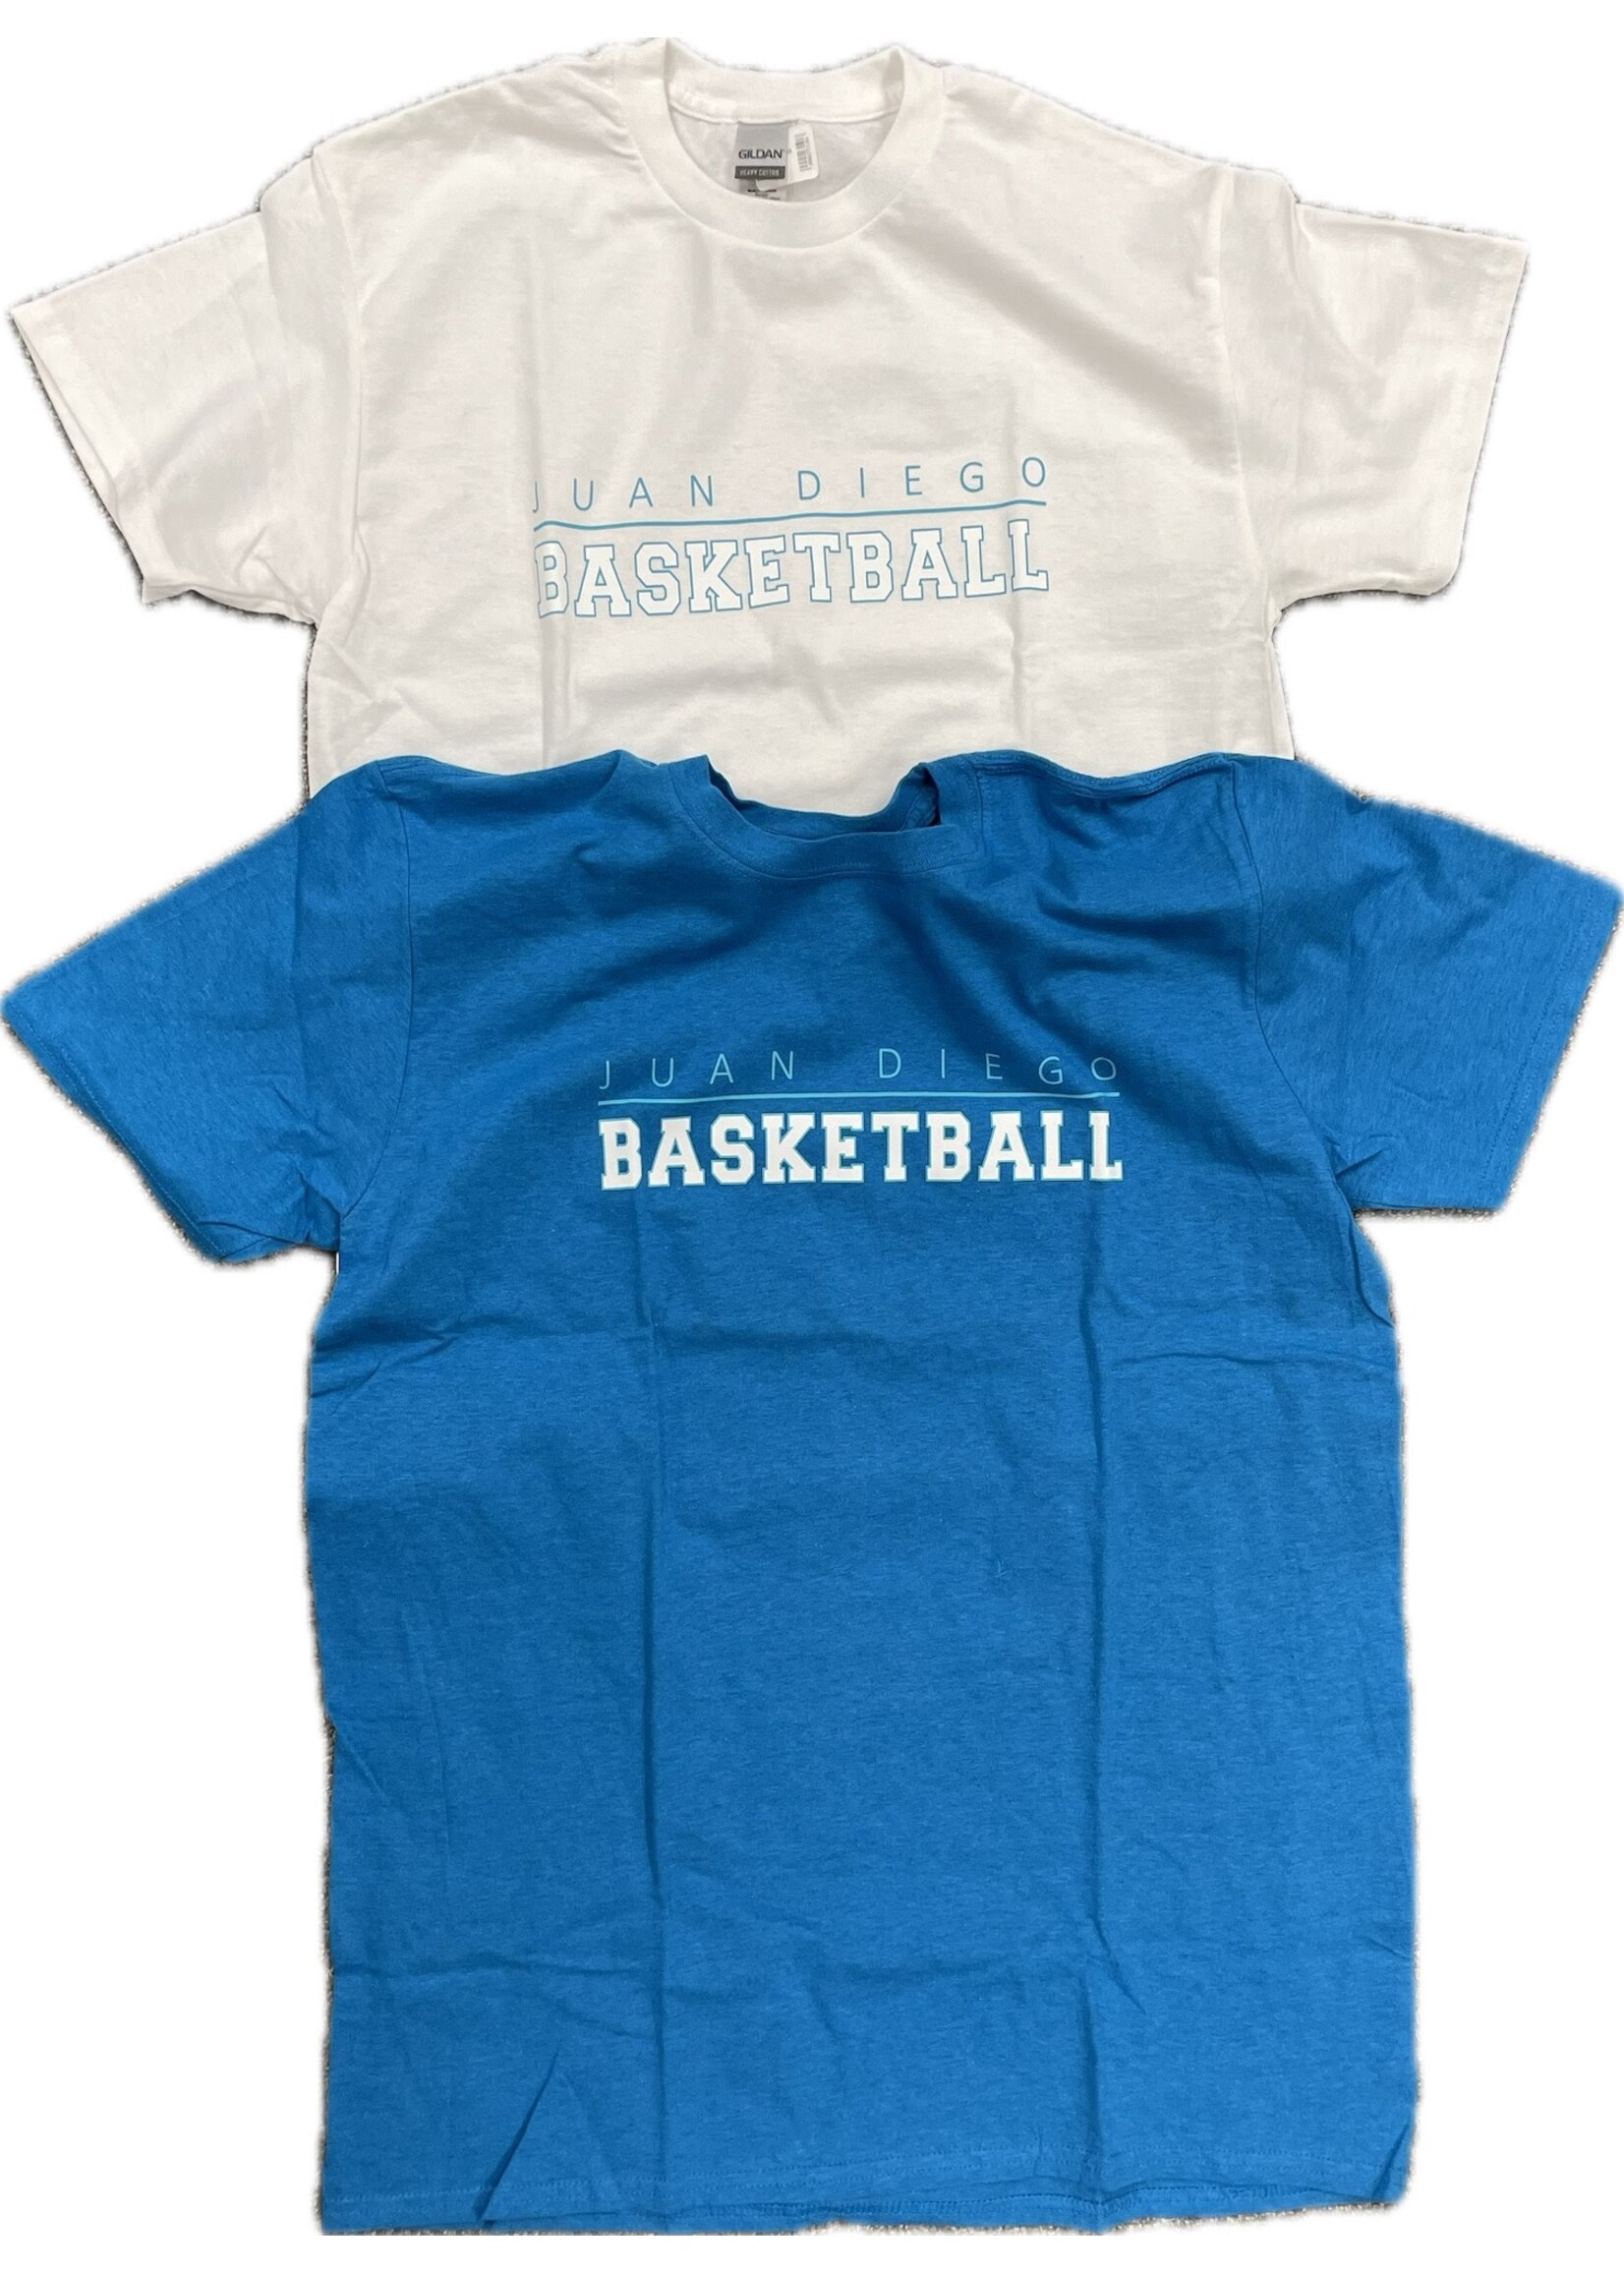 NON-UNIFORM Juan Diego Basketball Tee - Spirit Shirt, unisex